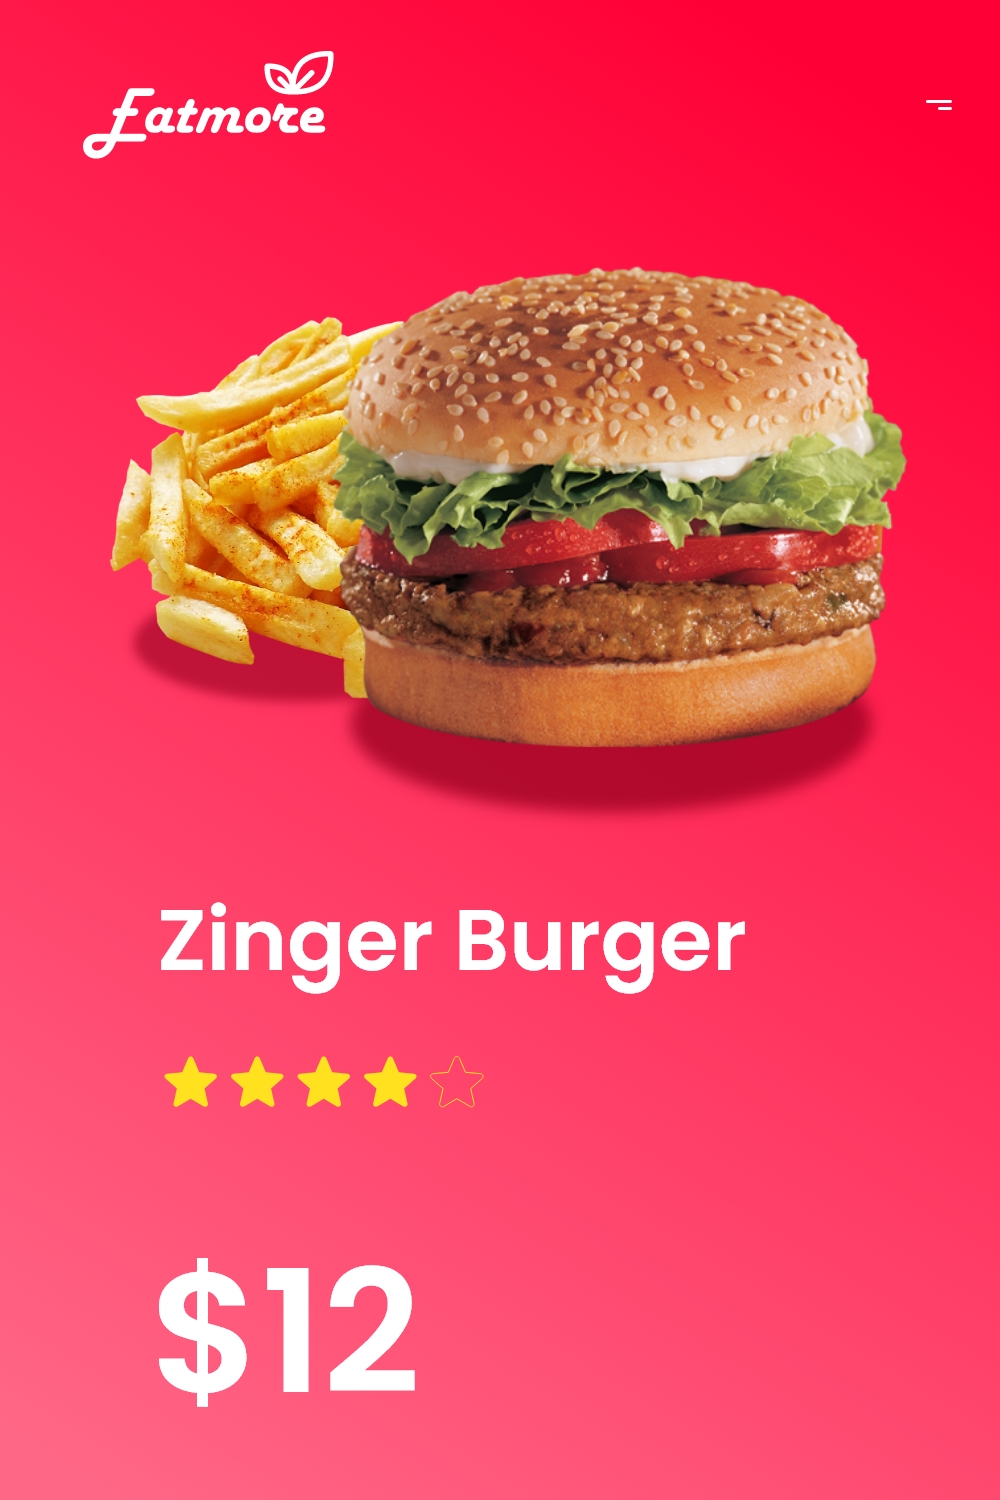 Eat more app-Design $15 pinterest preview image.